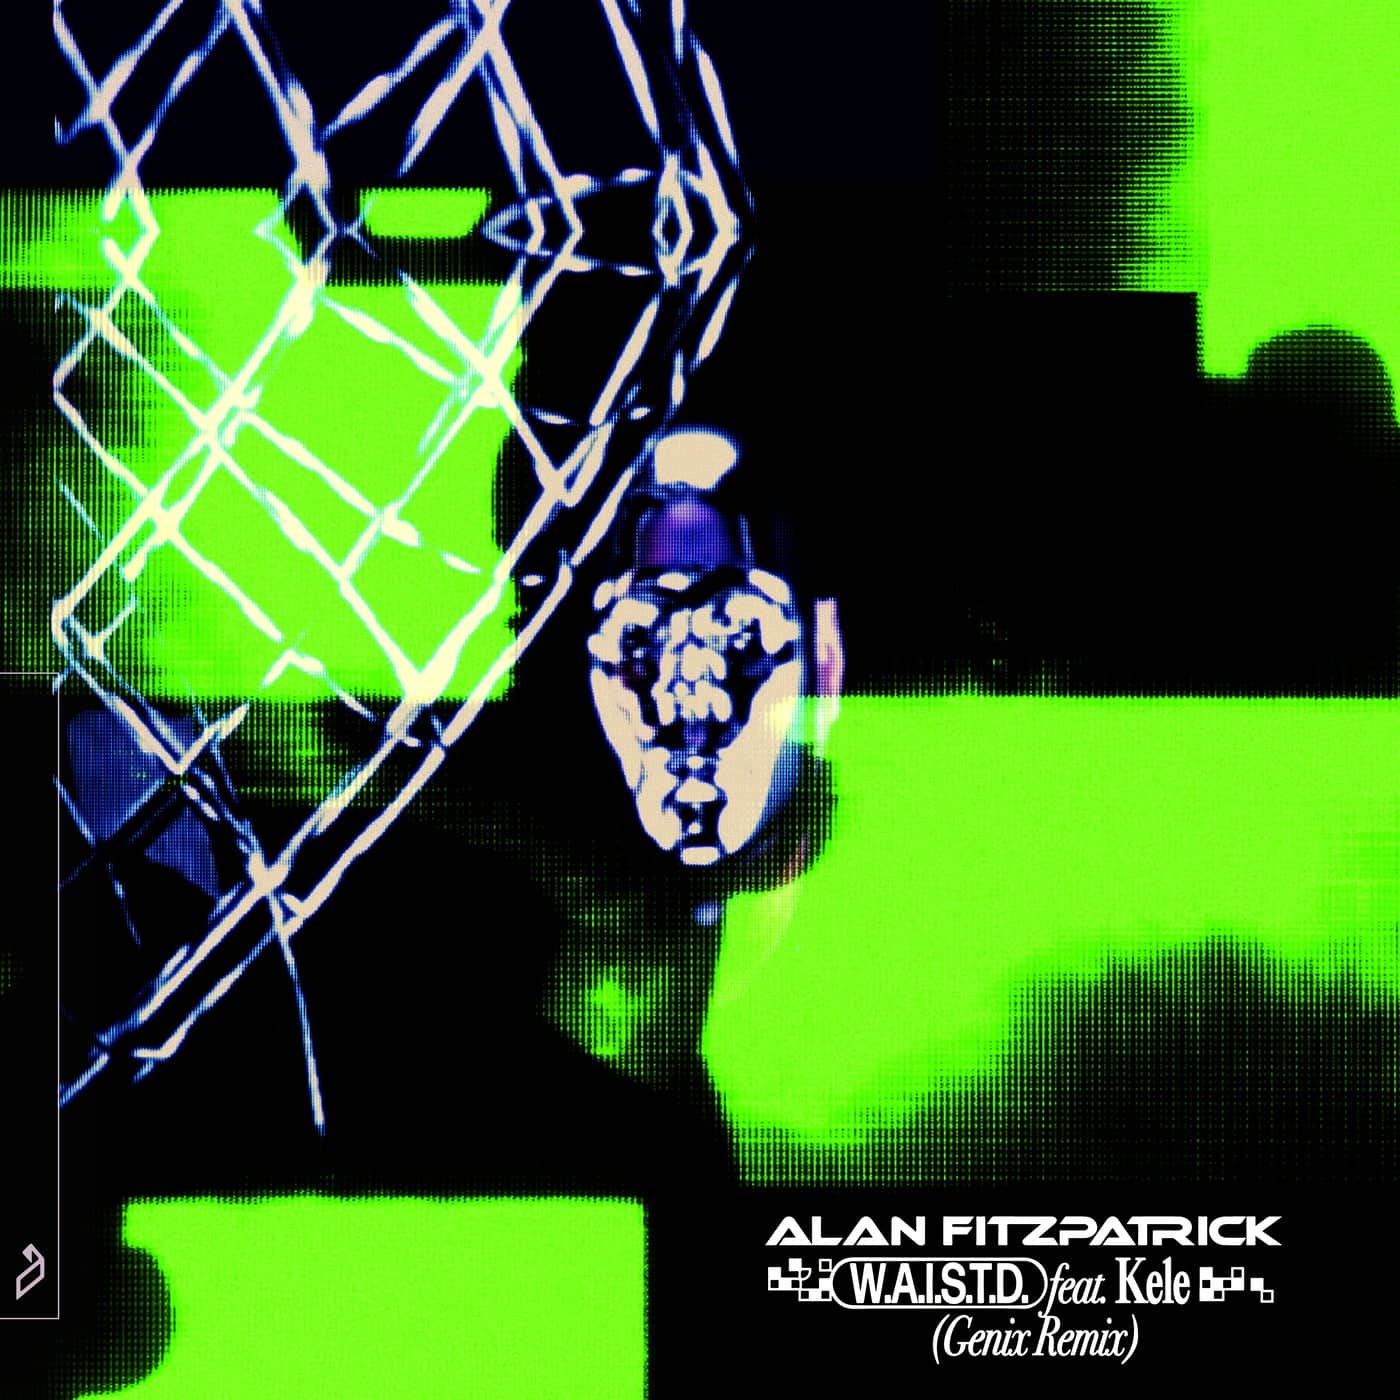 image cover: Alan Fitzpatrick, Kele - W.A.I.S.T.D. (Genix Remix) / ANJDEE632RBD